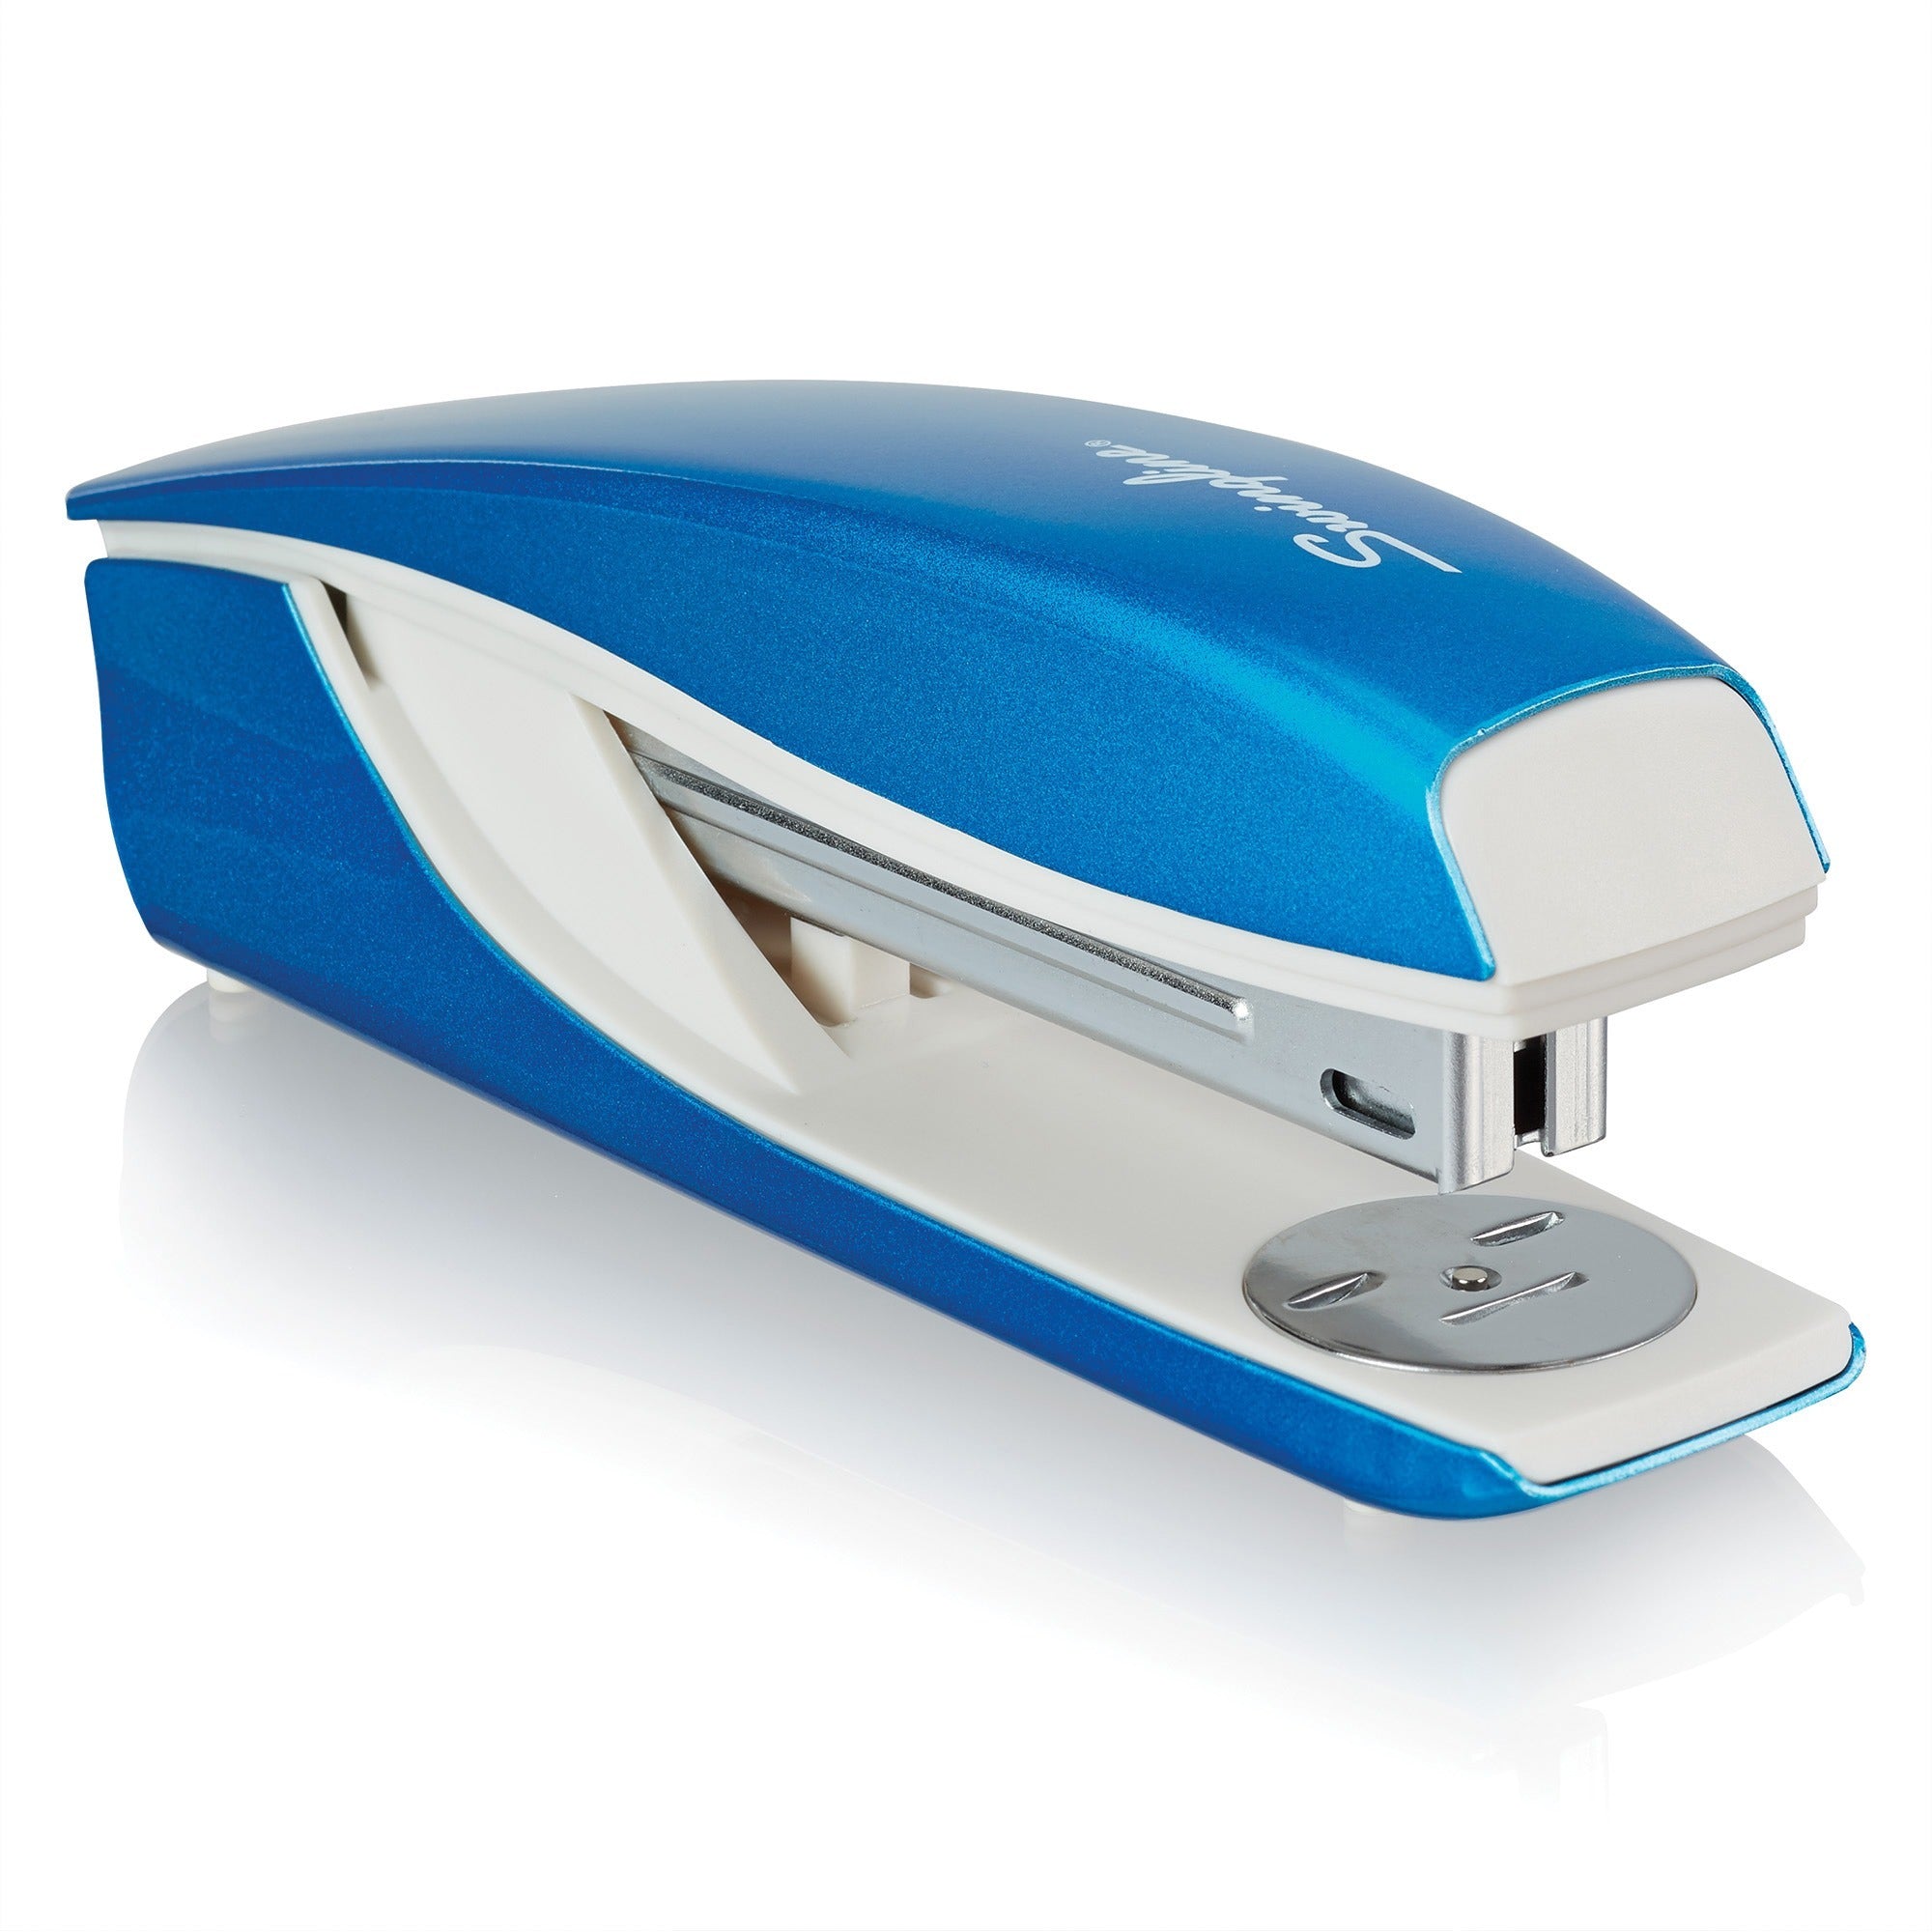 swingline-nexxt-series-wow-desktop-stapler-40-sheets-capacity-1-each-blue-white_swi55047036 - 3